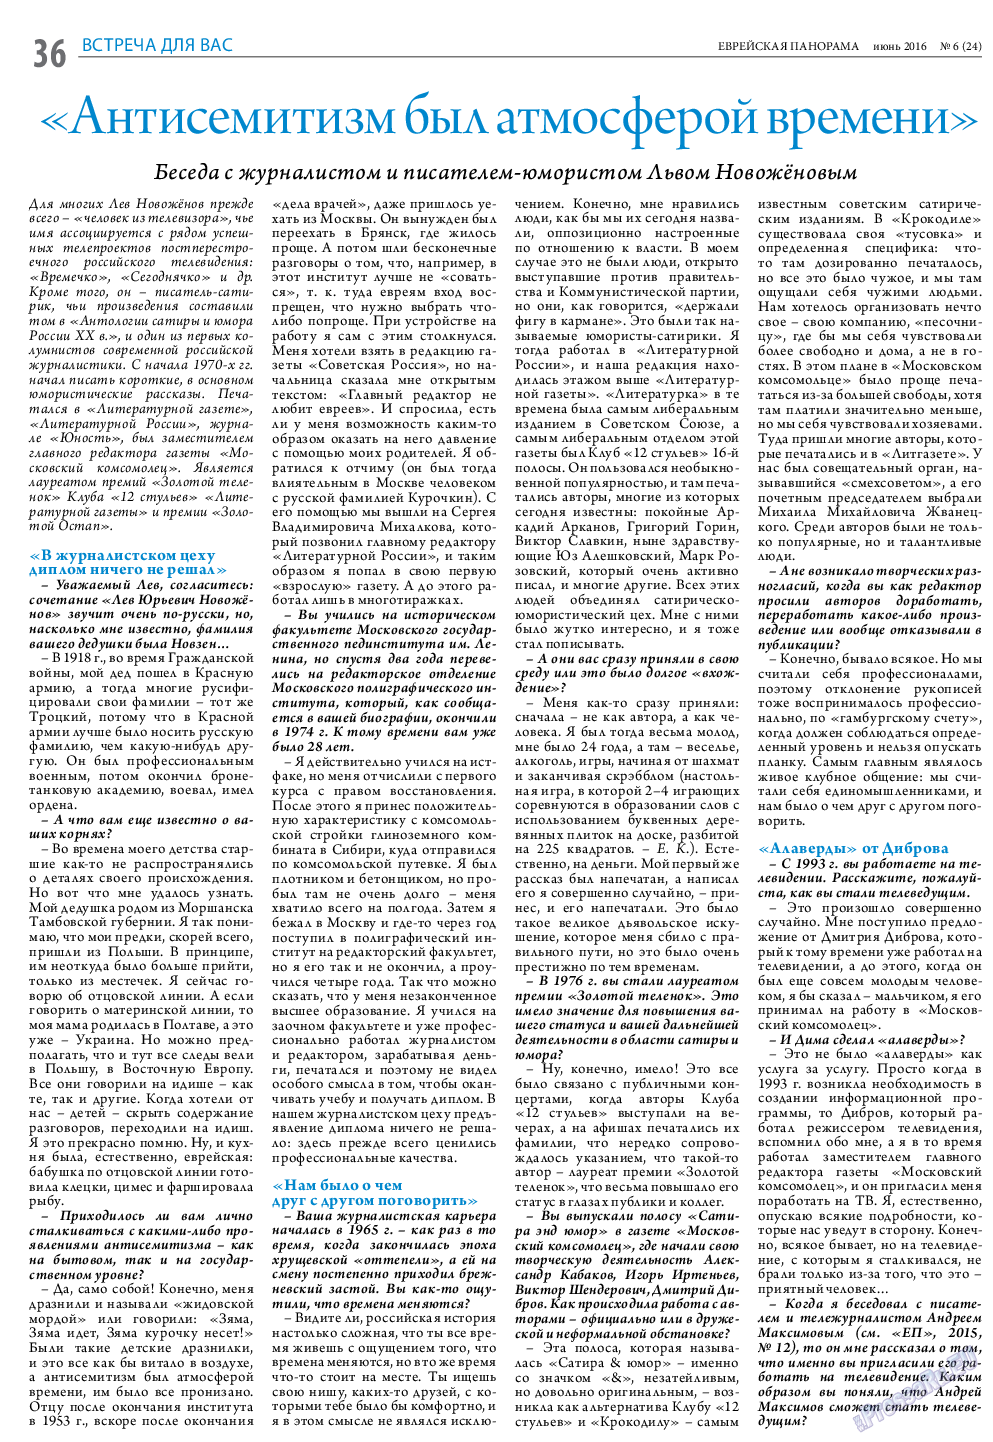 Еврейская панорама, газета. 2016 №6 стр.36